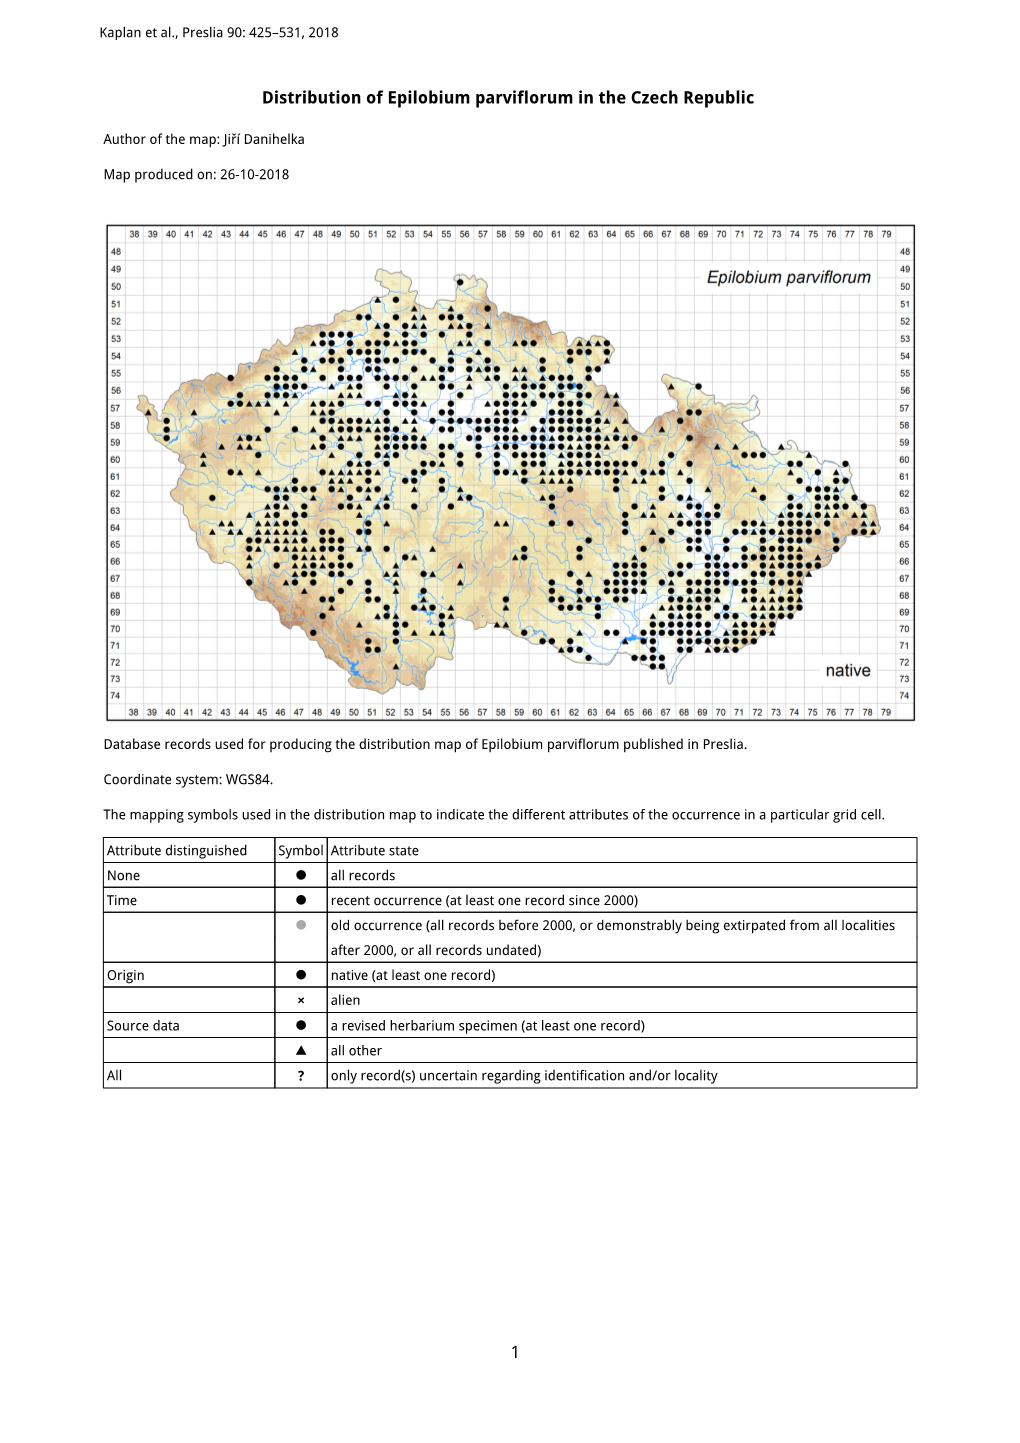 1 Distribution of Epilobium Parviflorum in the Czech Republic